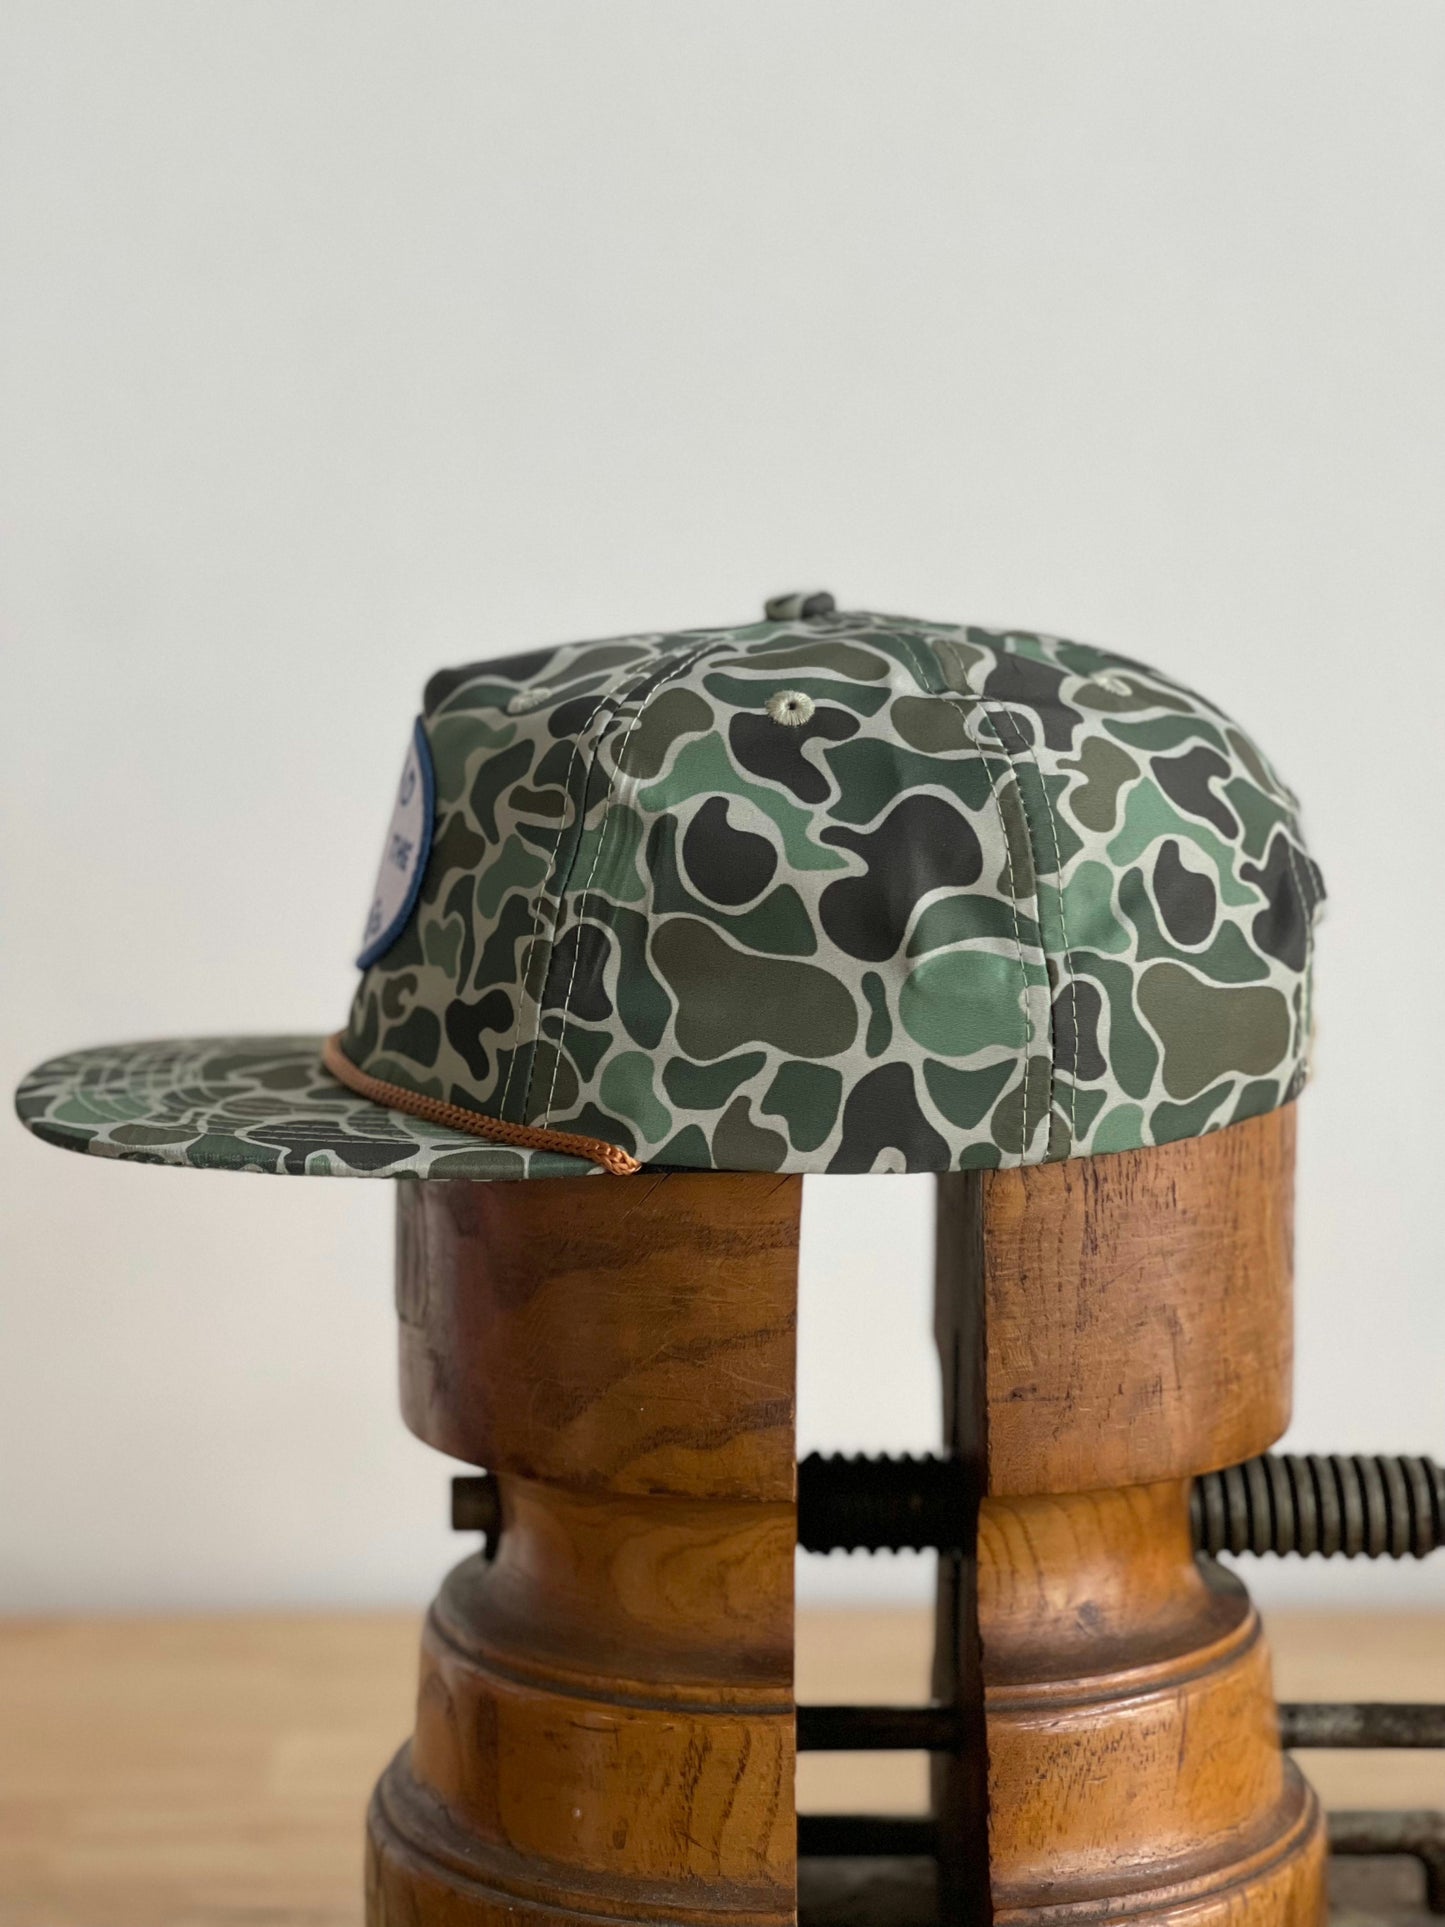 Shop Hat | Camo Emblem Ballad Of The Bird Dog - Hats Botbd